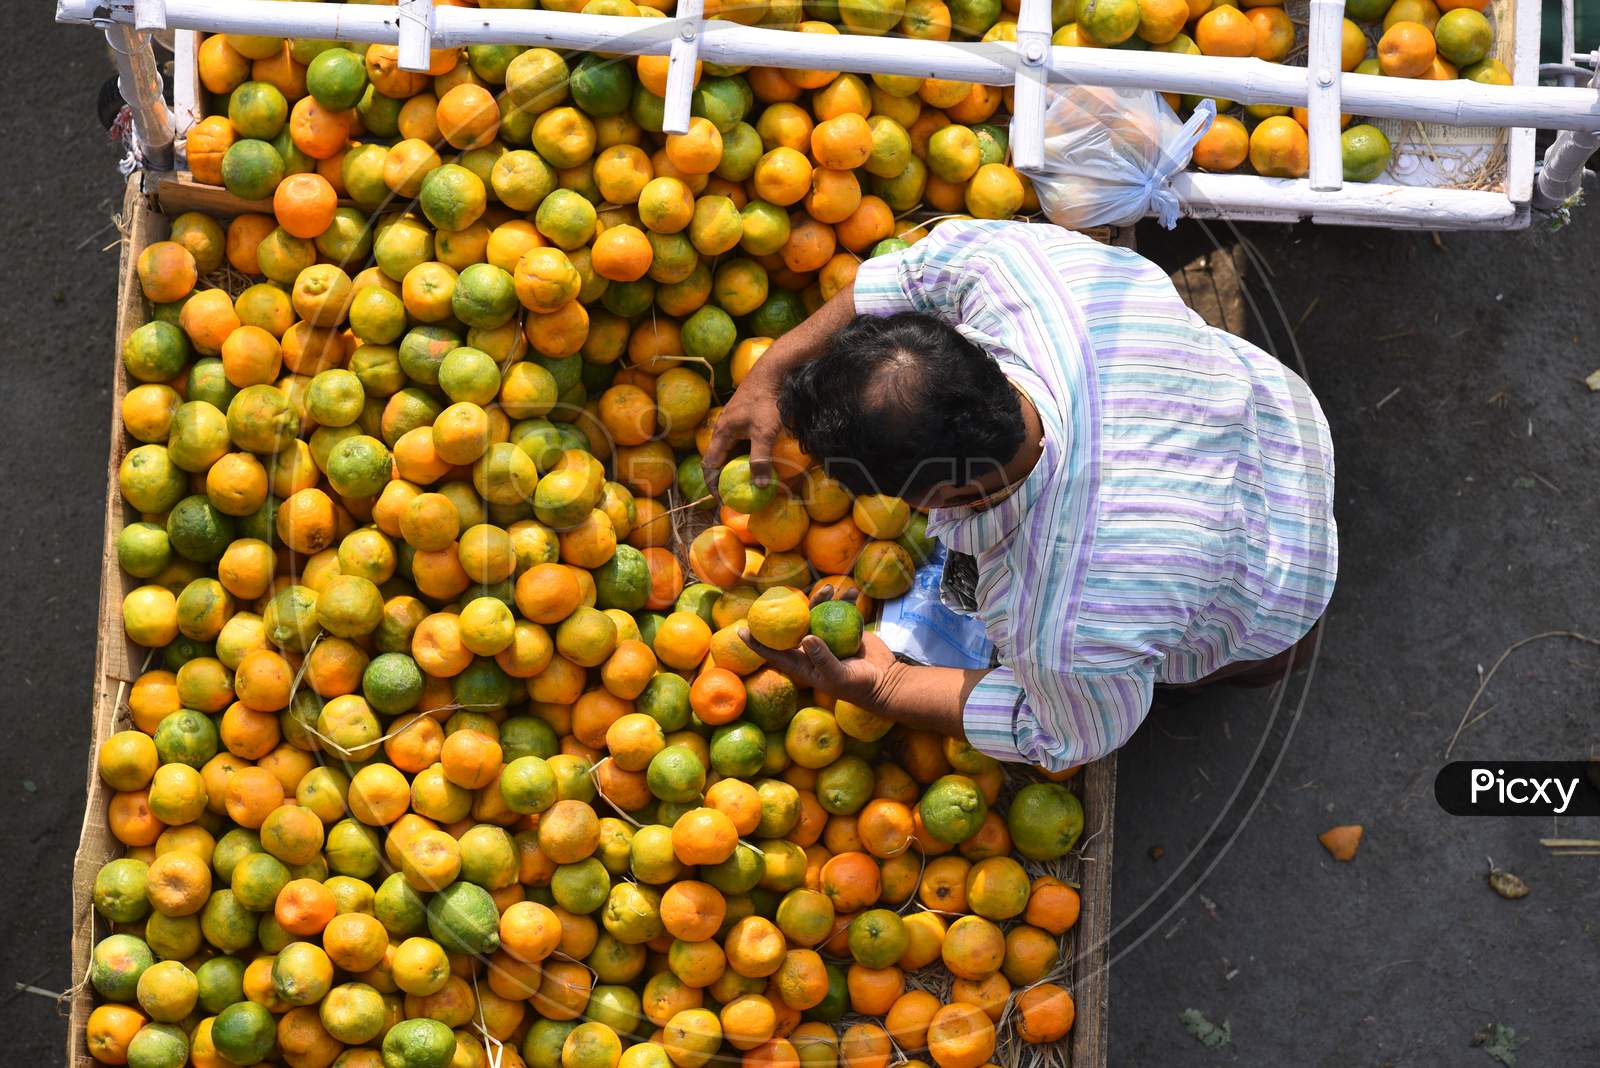 A orange fruit vendor arranges fruits, citric acid rich fruits gain demand amid corona virus outbreak